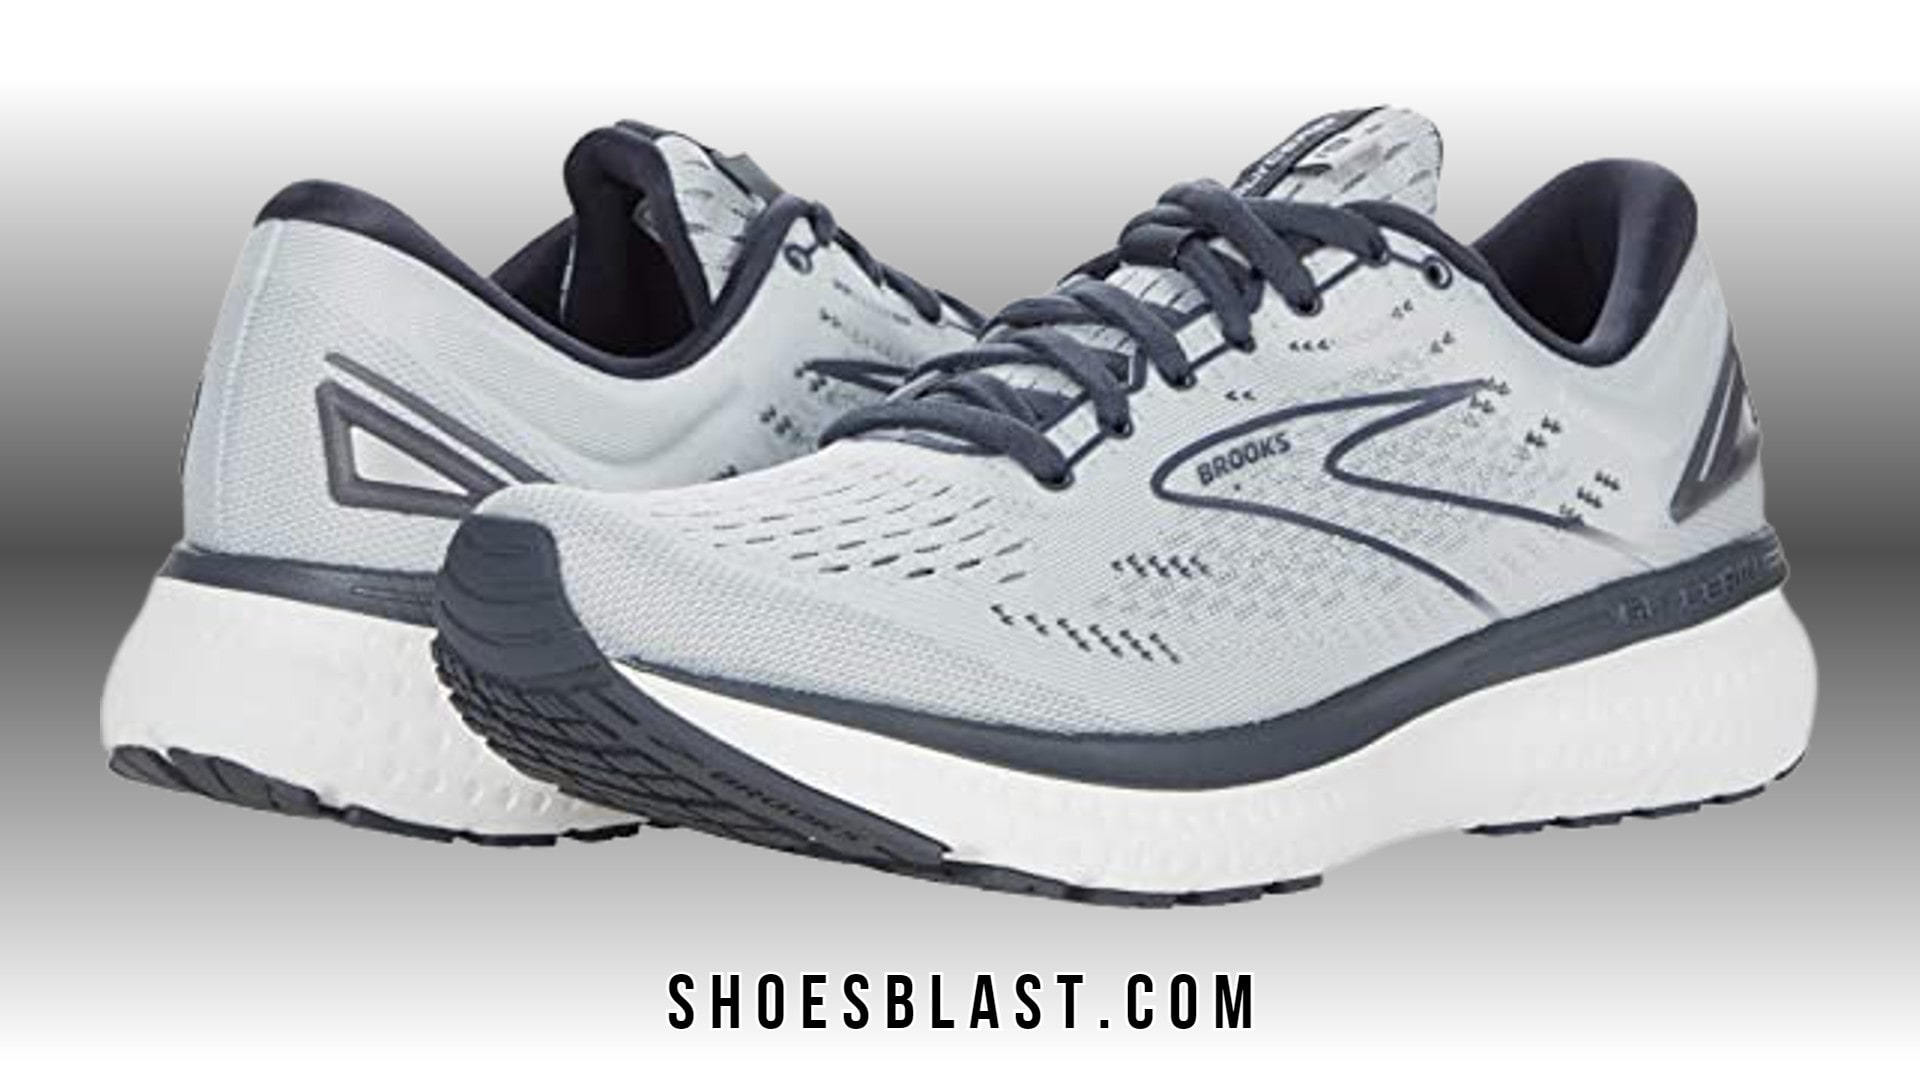 Best running shoes for older runners